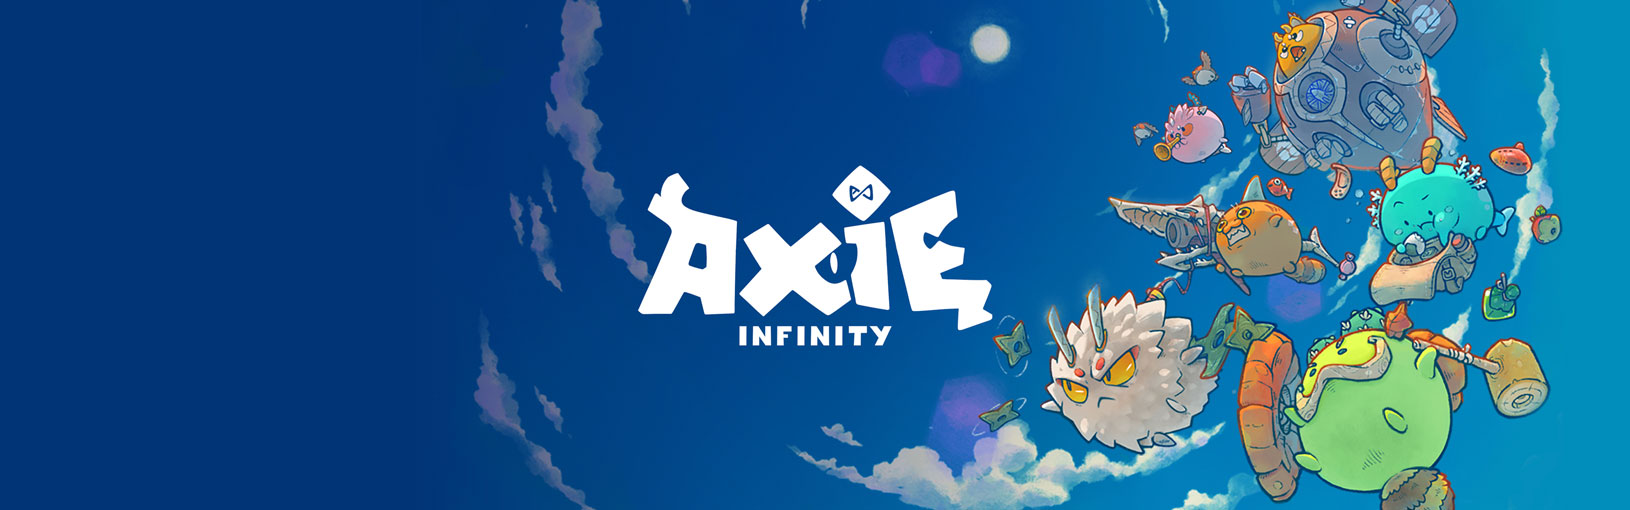 Axie Infinity: Origins Season 2 Launch - Play to Earn